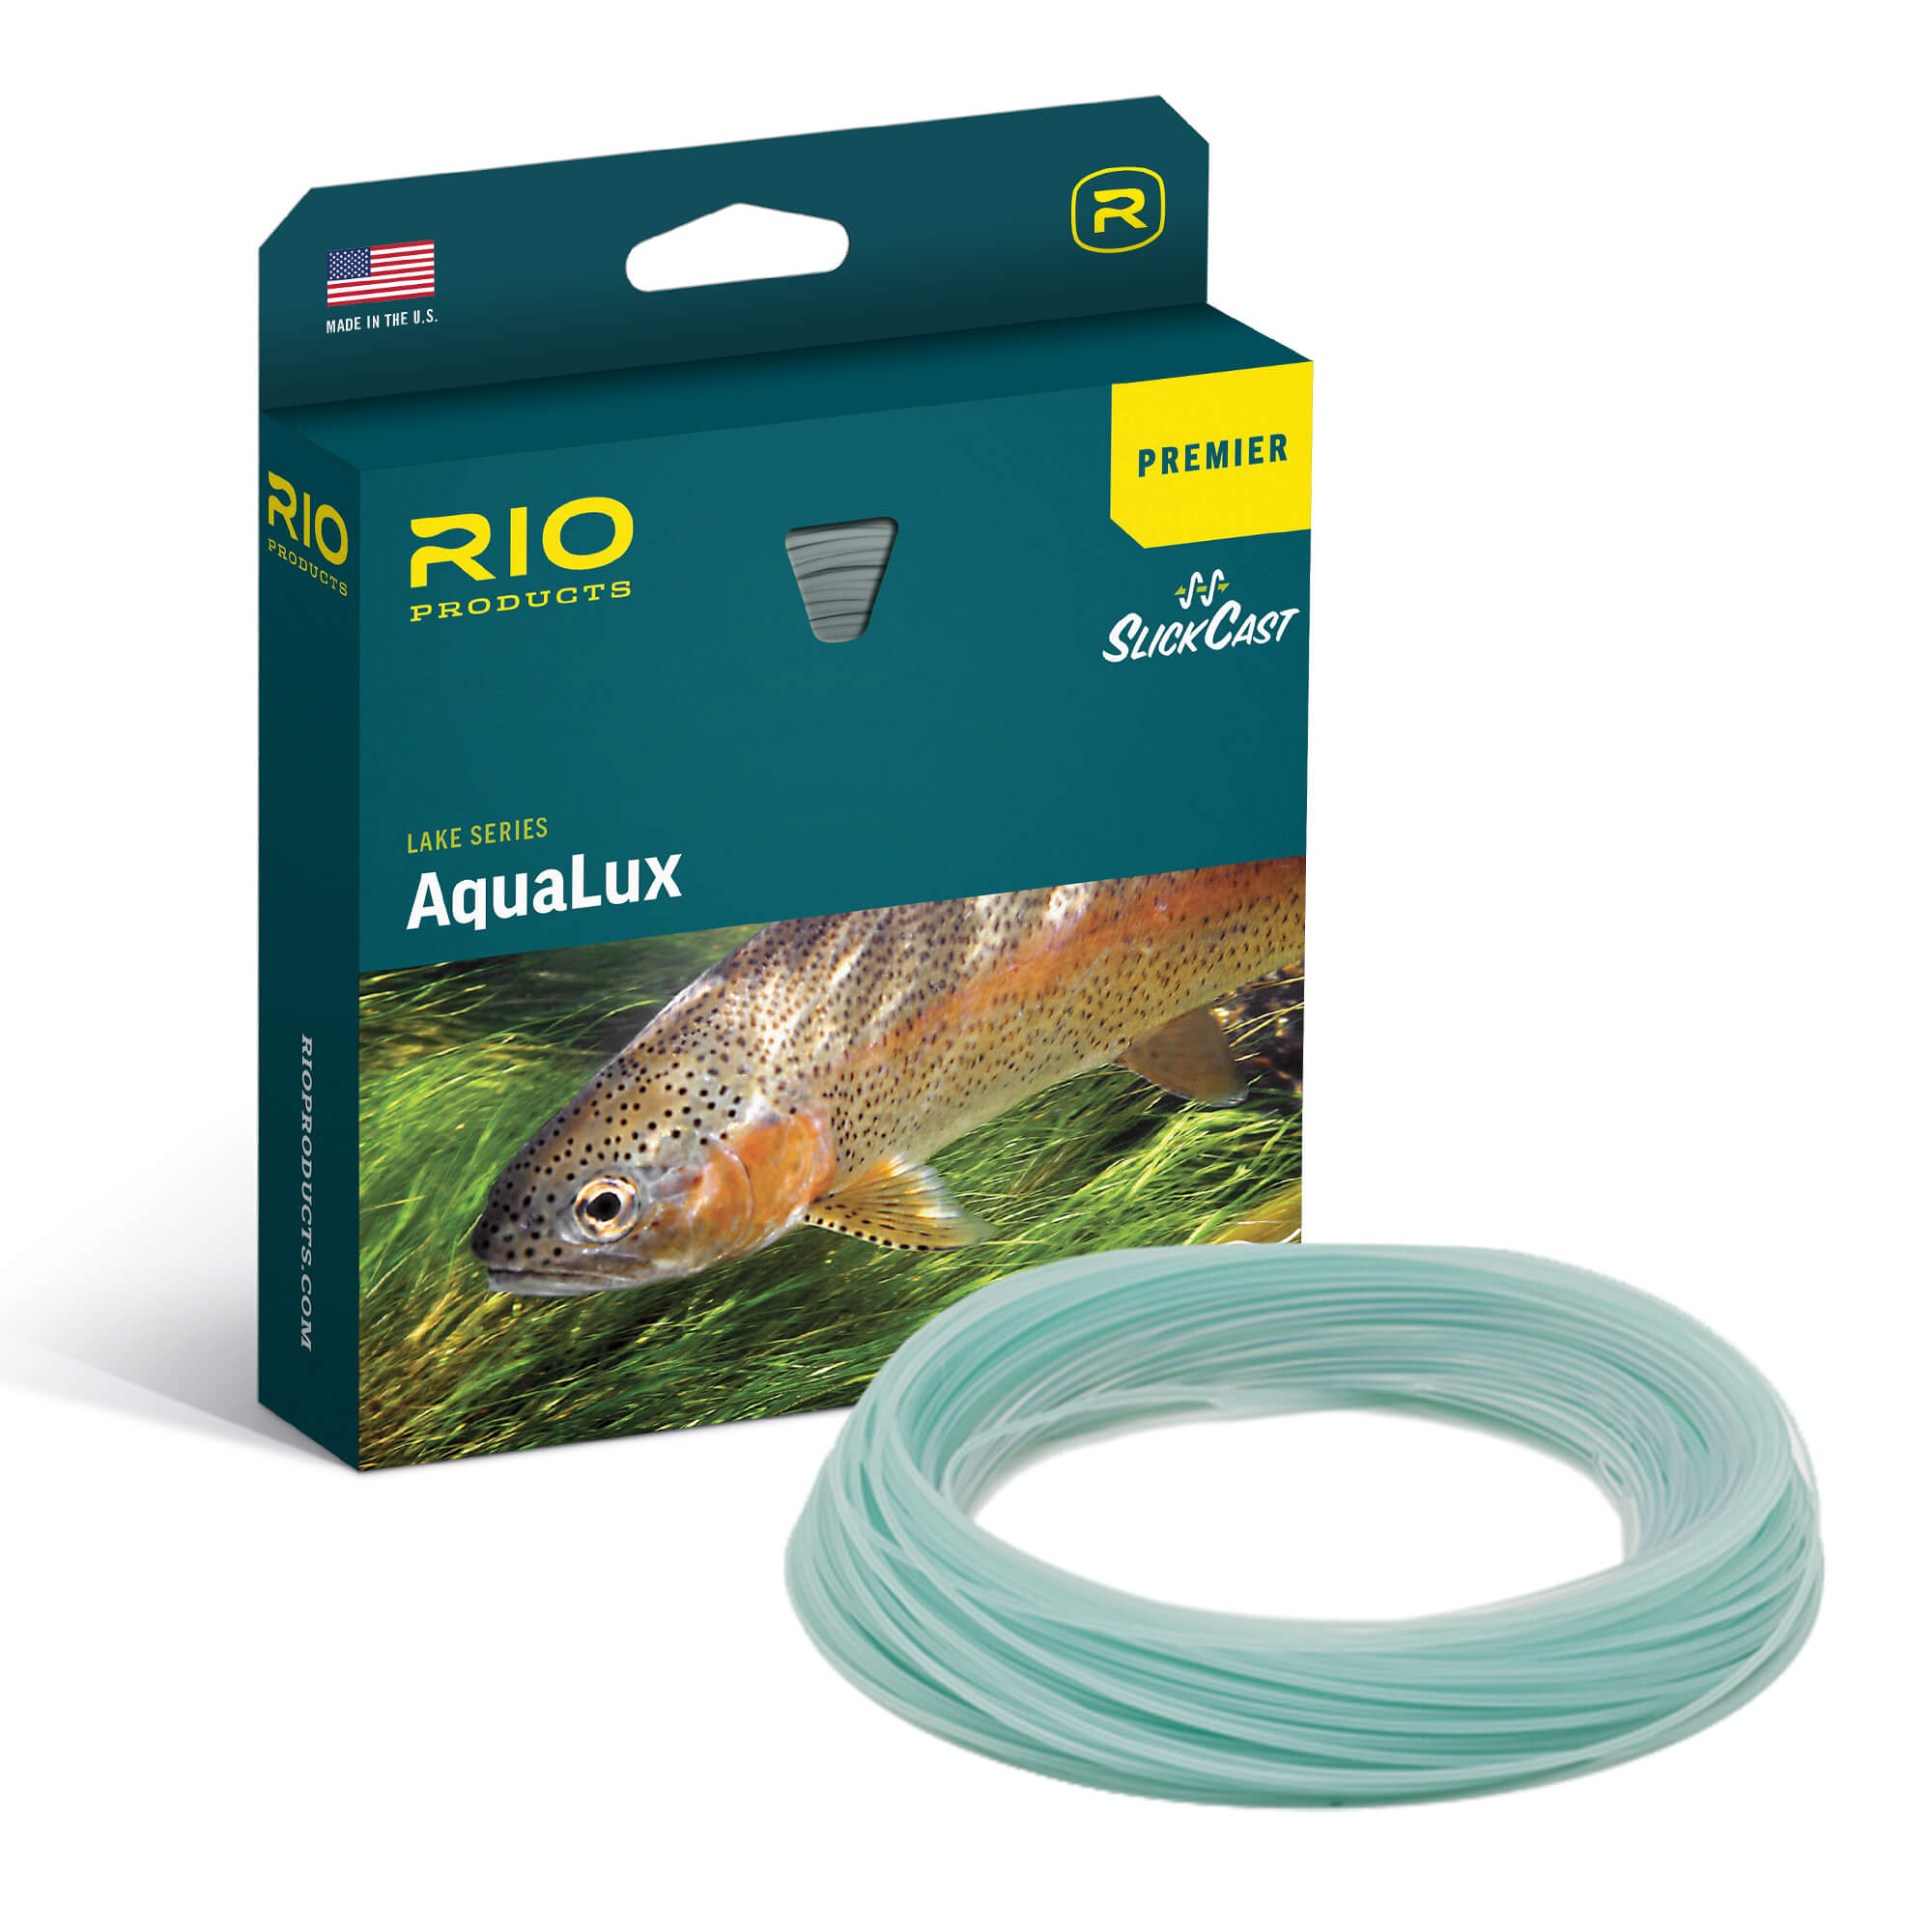 RIO Premier Aqualux Fly Line – Guide Flyfishing, Fly Fishing Rods, Reels, Sage, Redington, RIO